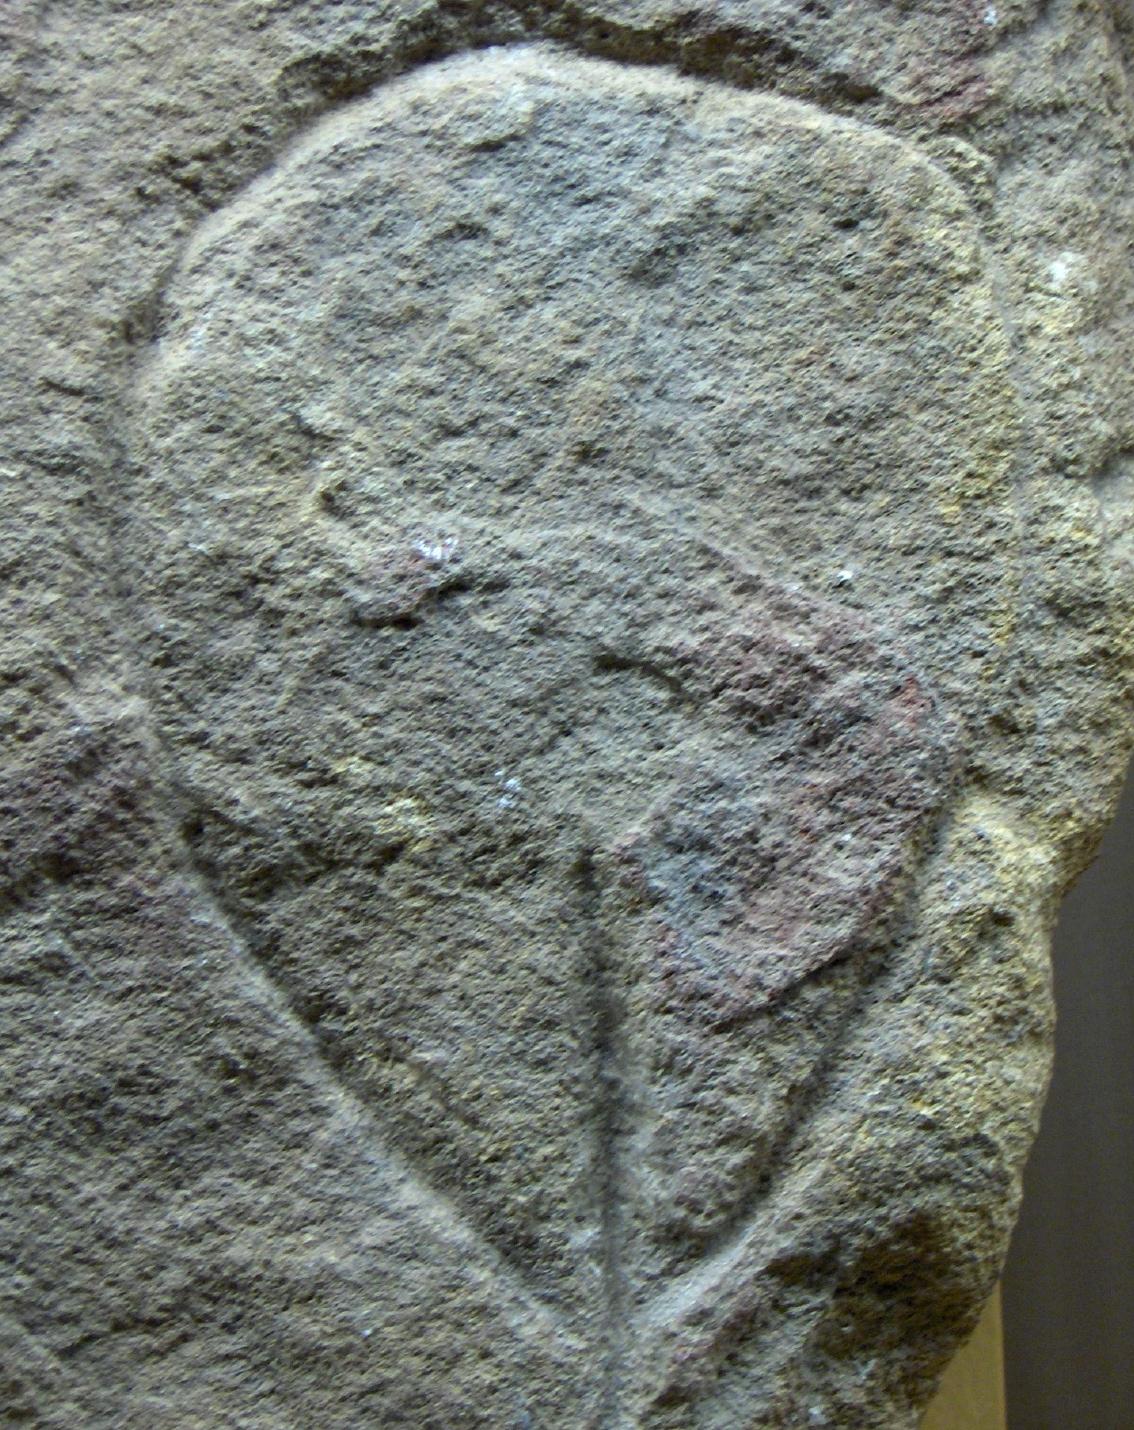 Vulva in pietra (Paleolitico, Musée des antiquités nationales, Saint-Germain-en-Laye; fonte: commons.wikimedia.org).